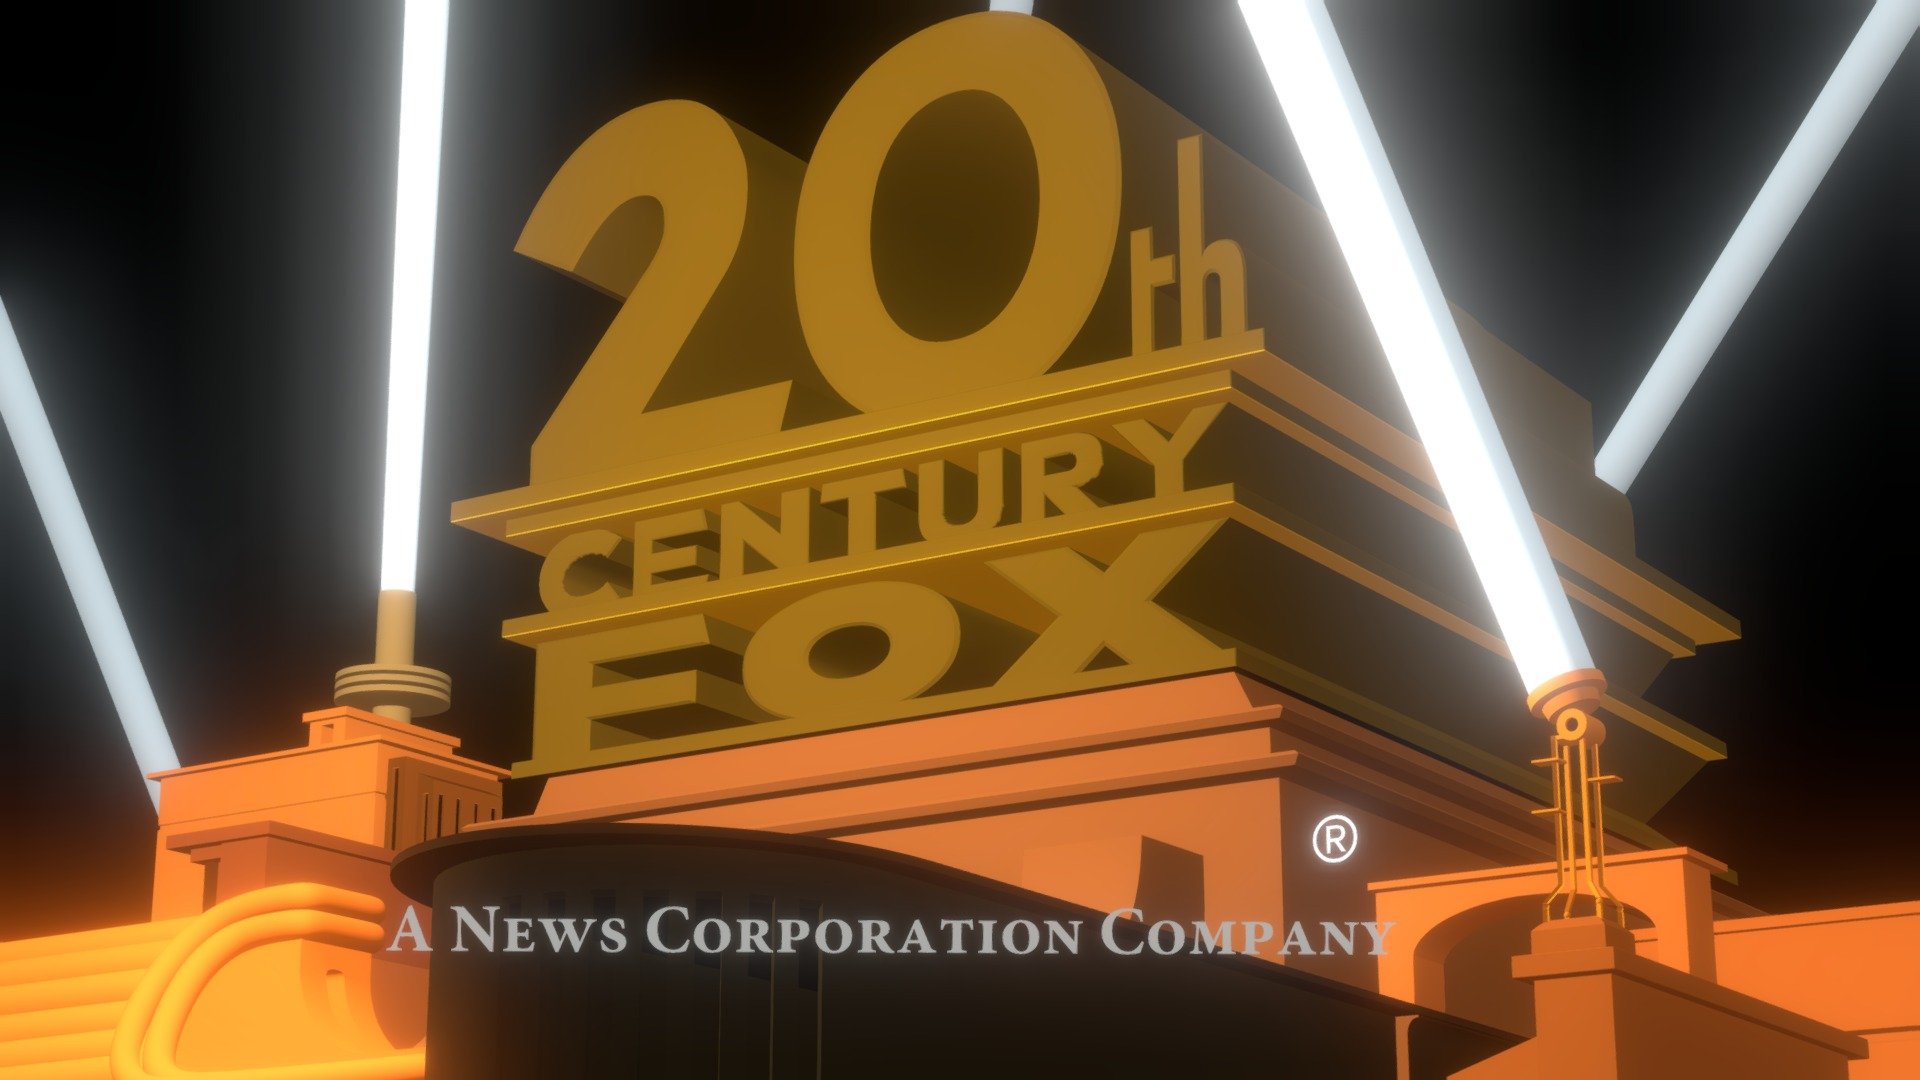 20th Century Fox Sketchfab 75